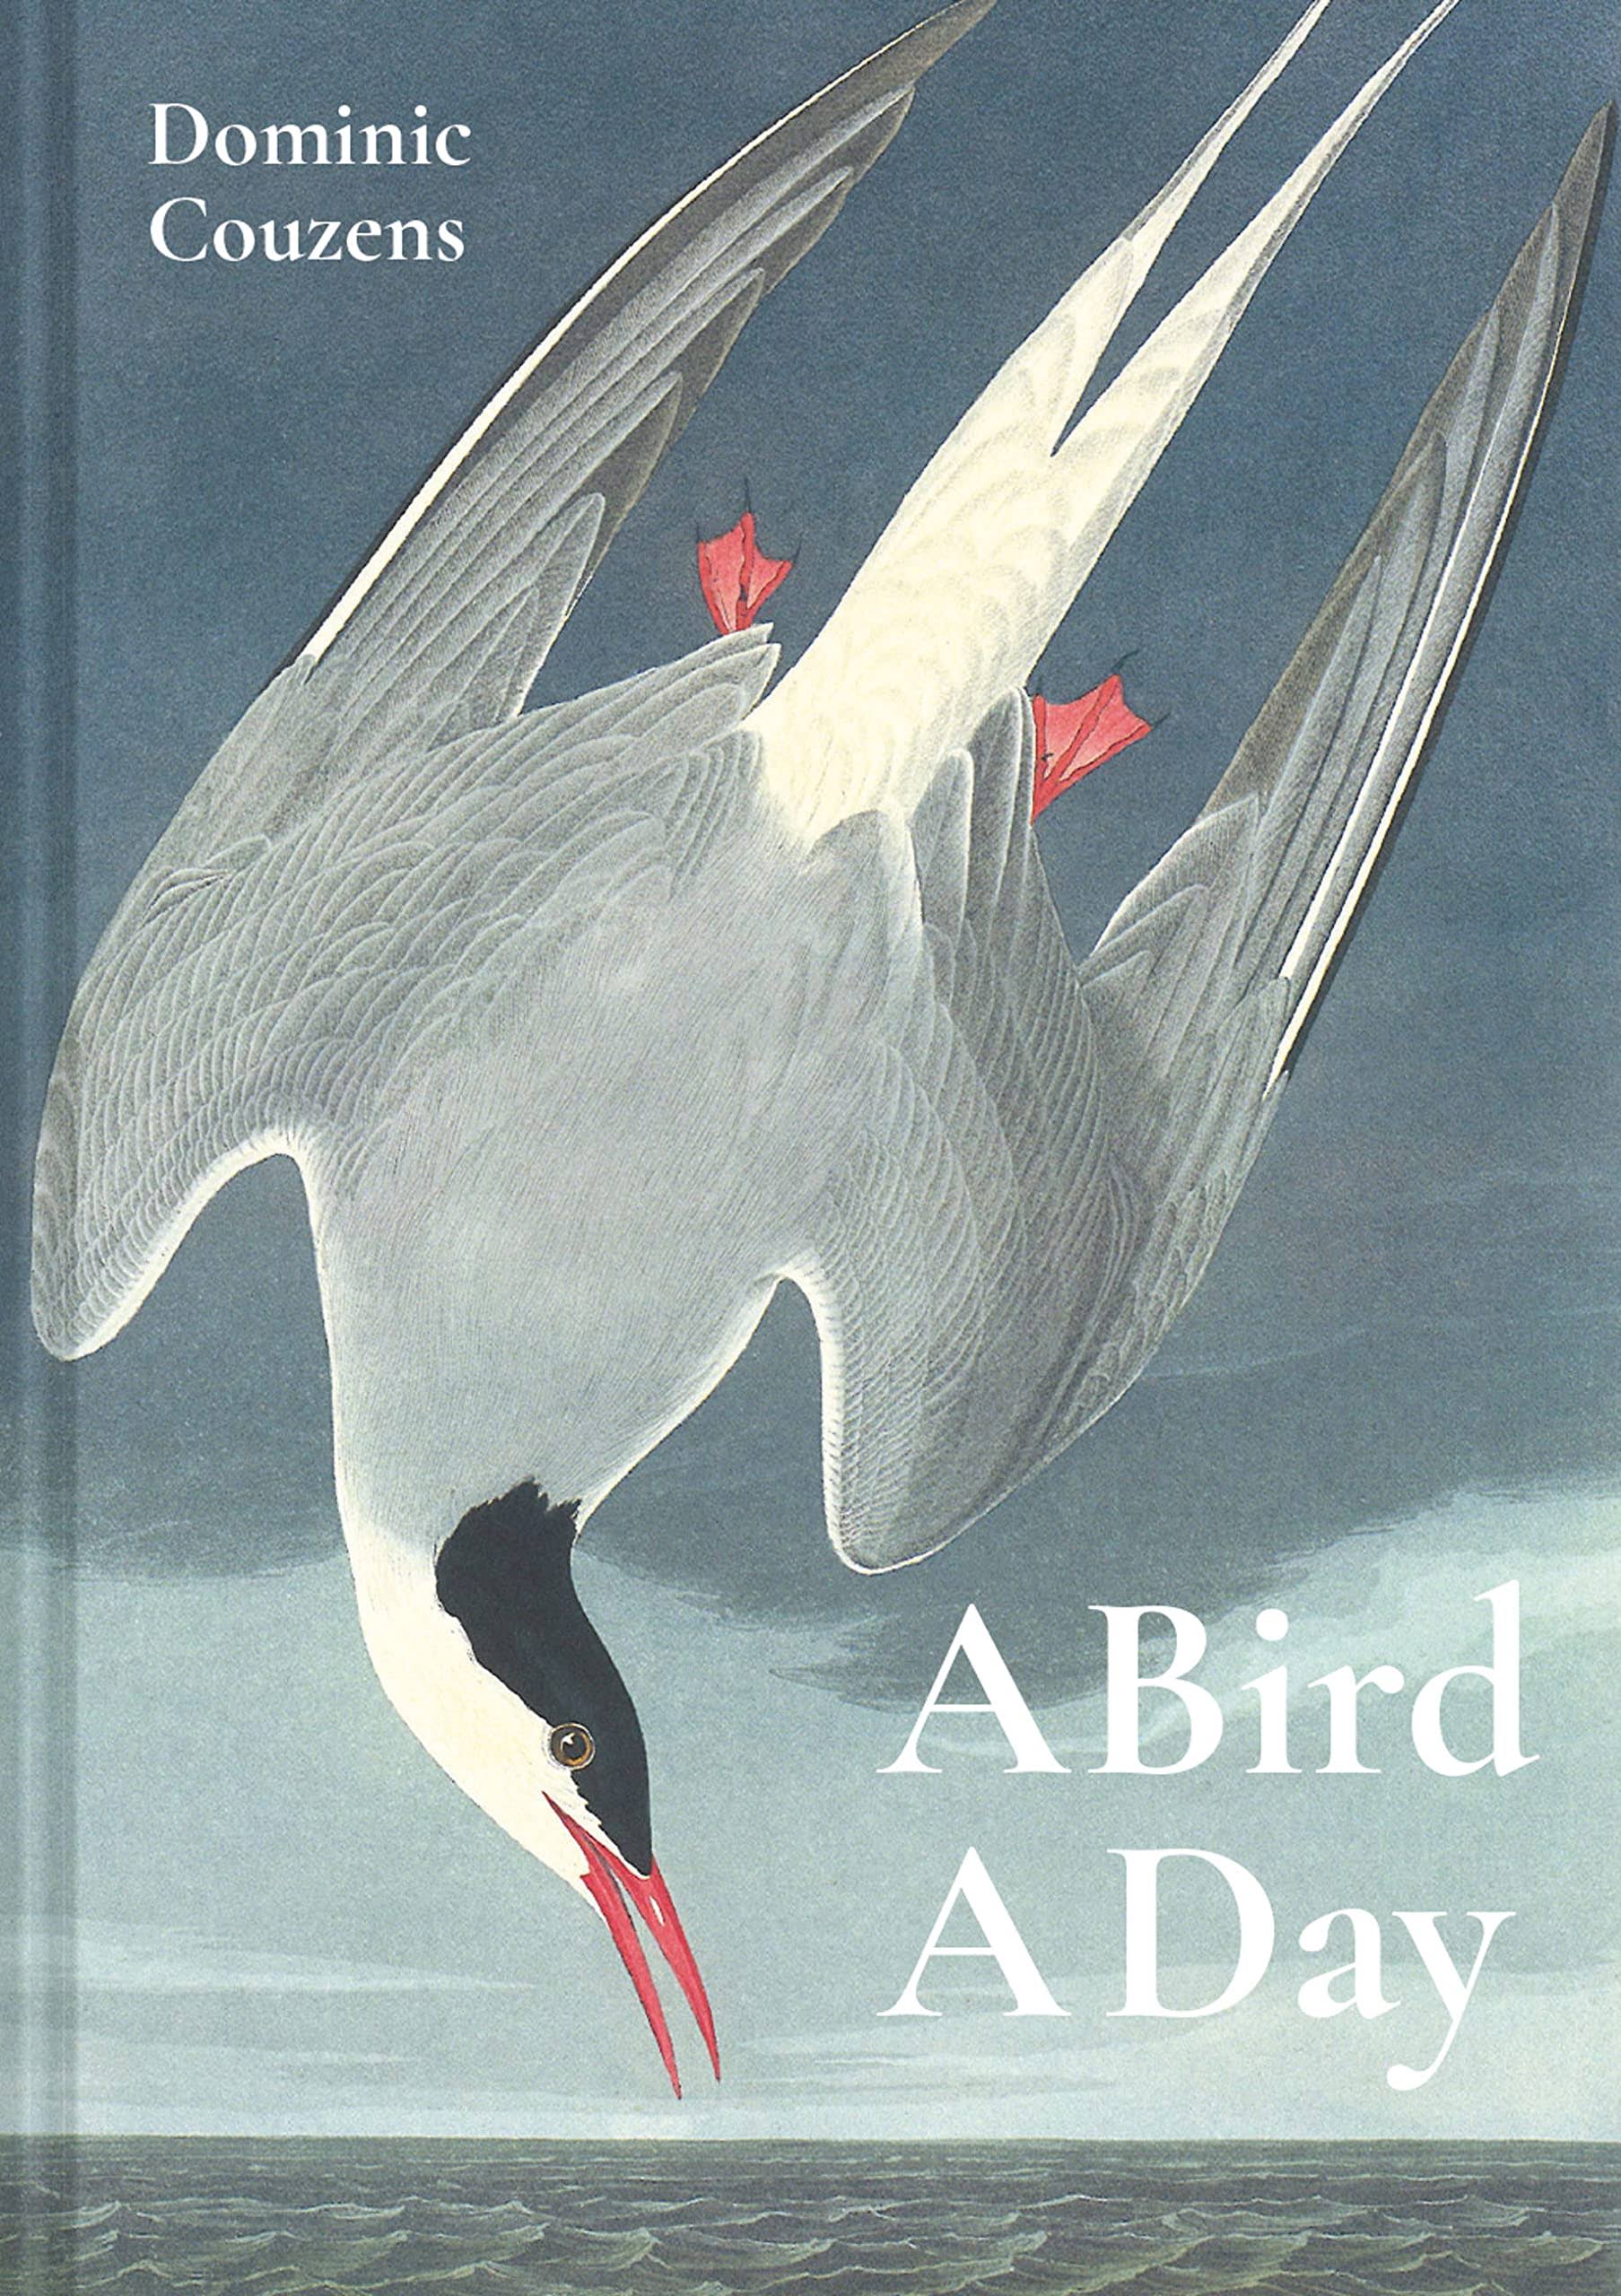 A Bird A Day [Book]